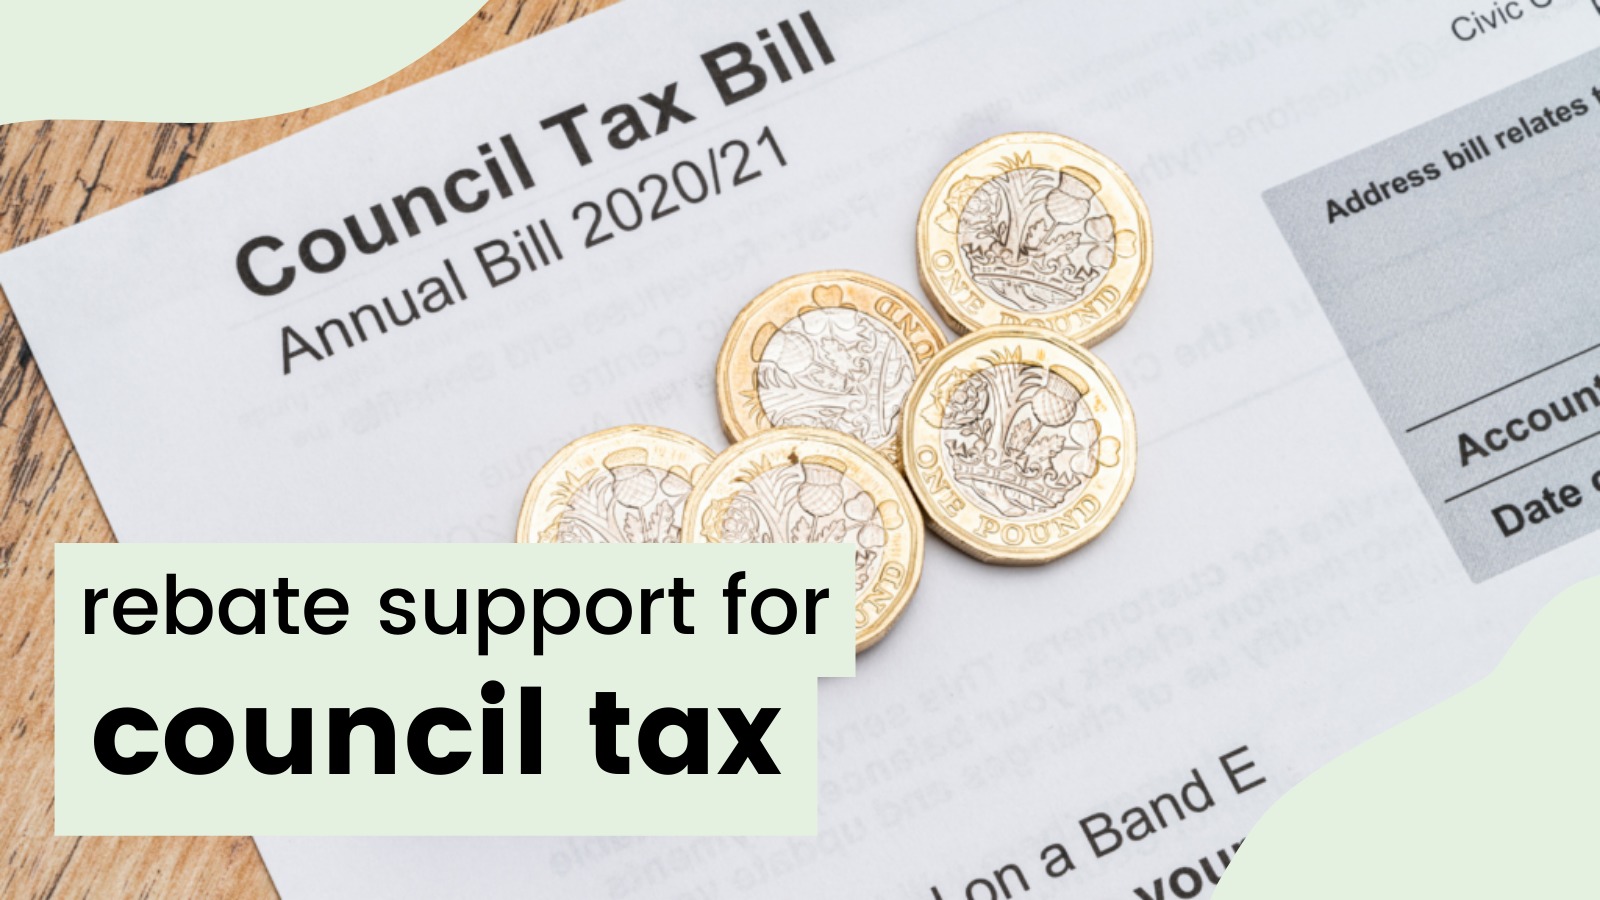 A photo of a council tax bill